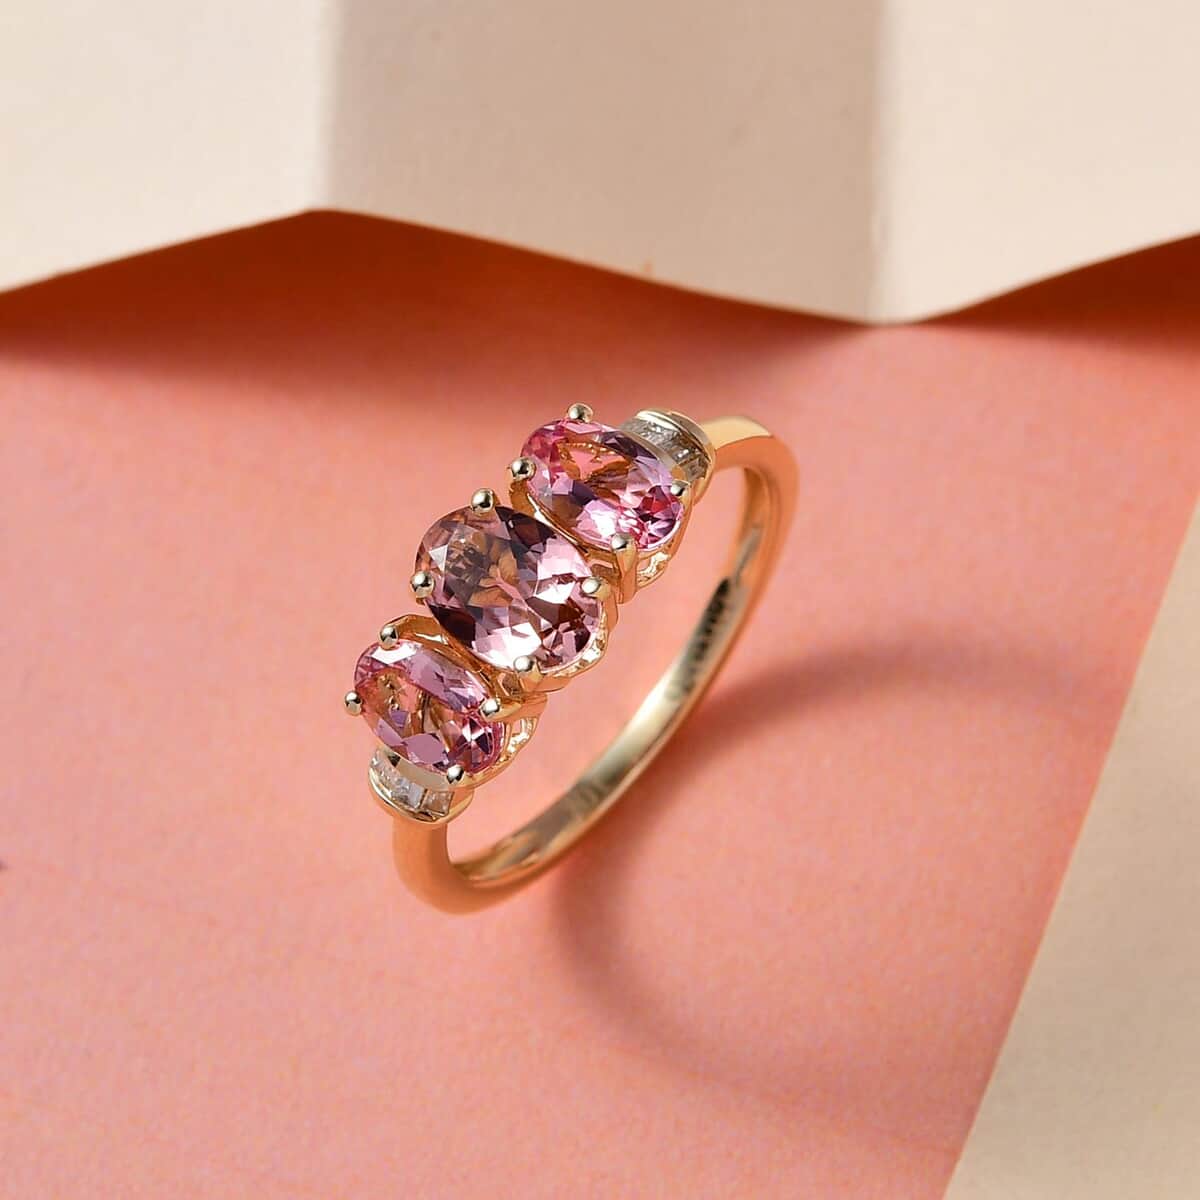 Luxoro AAA Morro Redondo Pink Tourmaline and Diamond Trilogy Ring in 10K Yellow Gold, Pink Tourmaline Jewelry, Birthday Anniversary Wedding Gift For Her 1.70 ctw image number 1